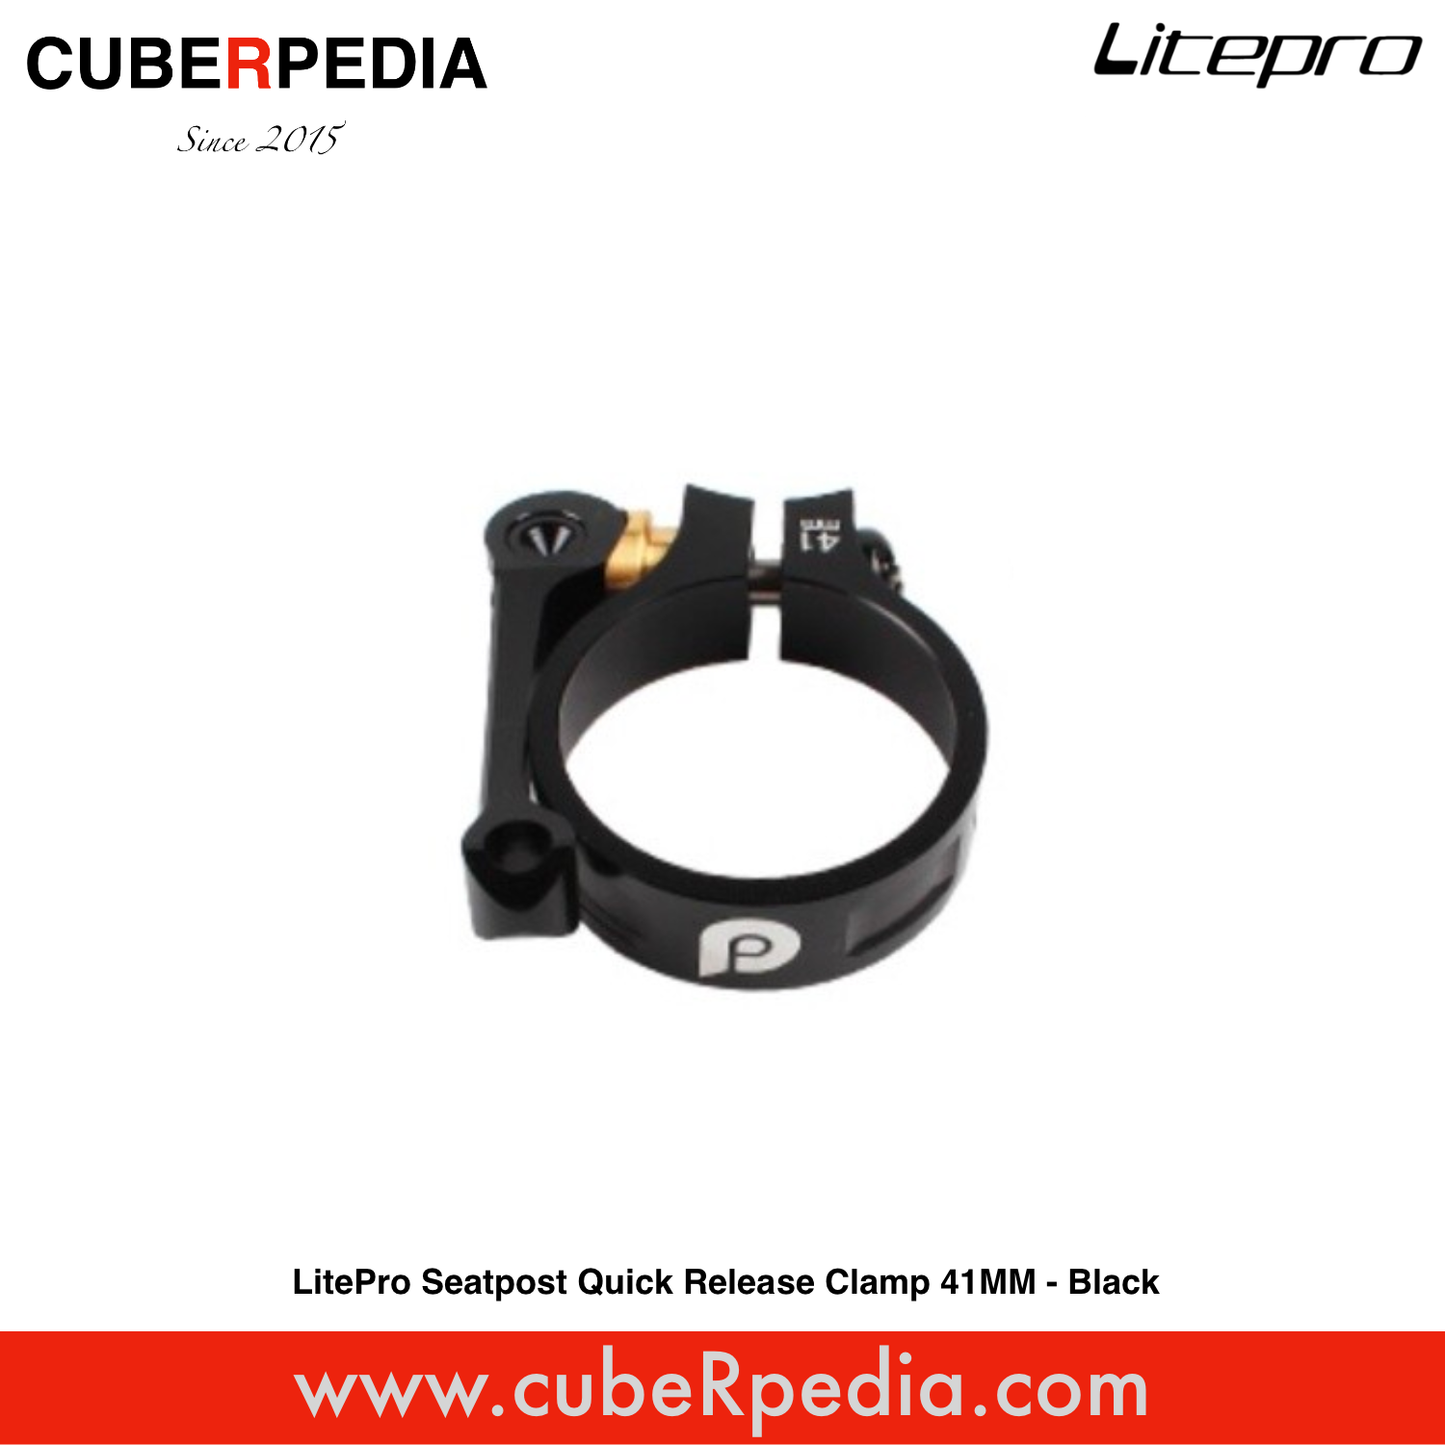 LitePro Seatpost Quick Release Clamp 41MM - Black